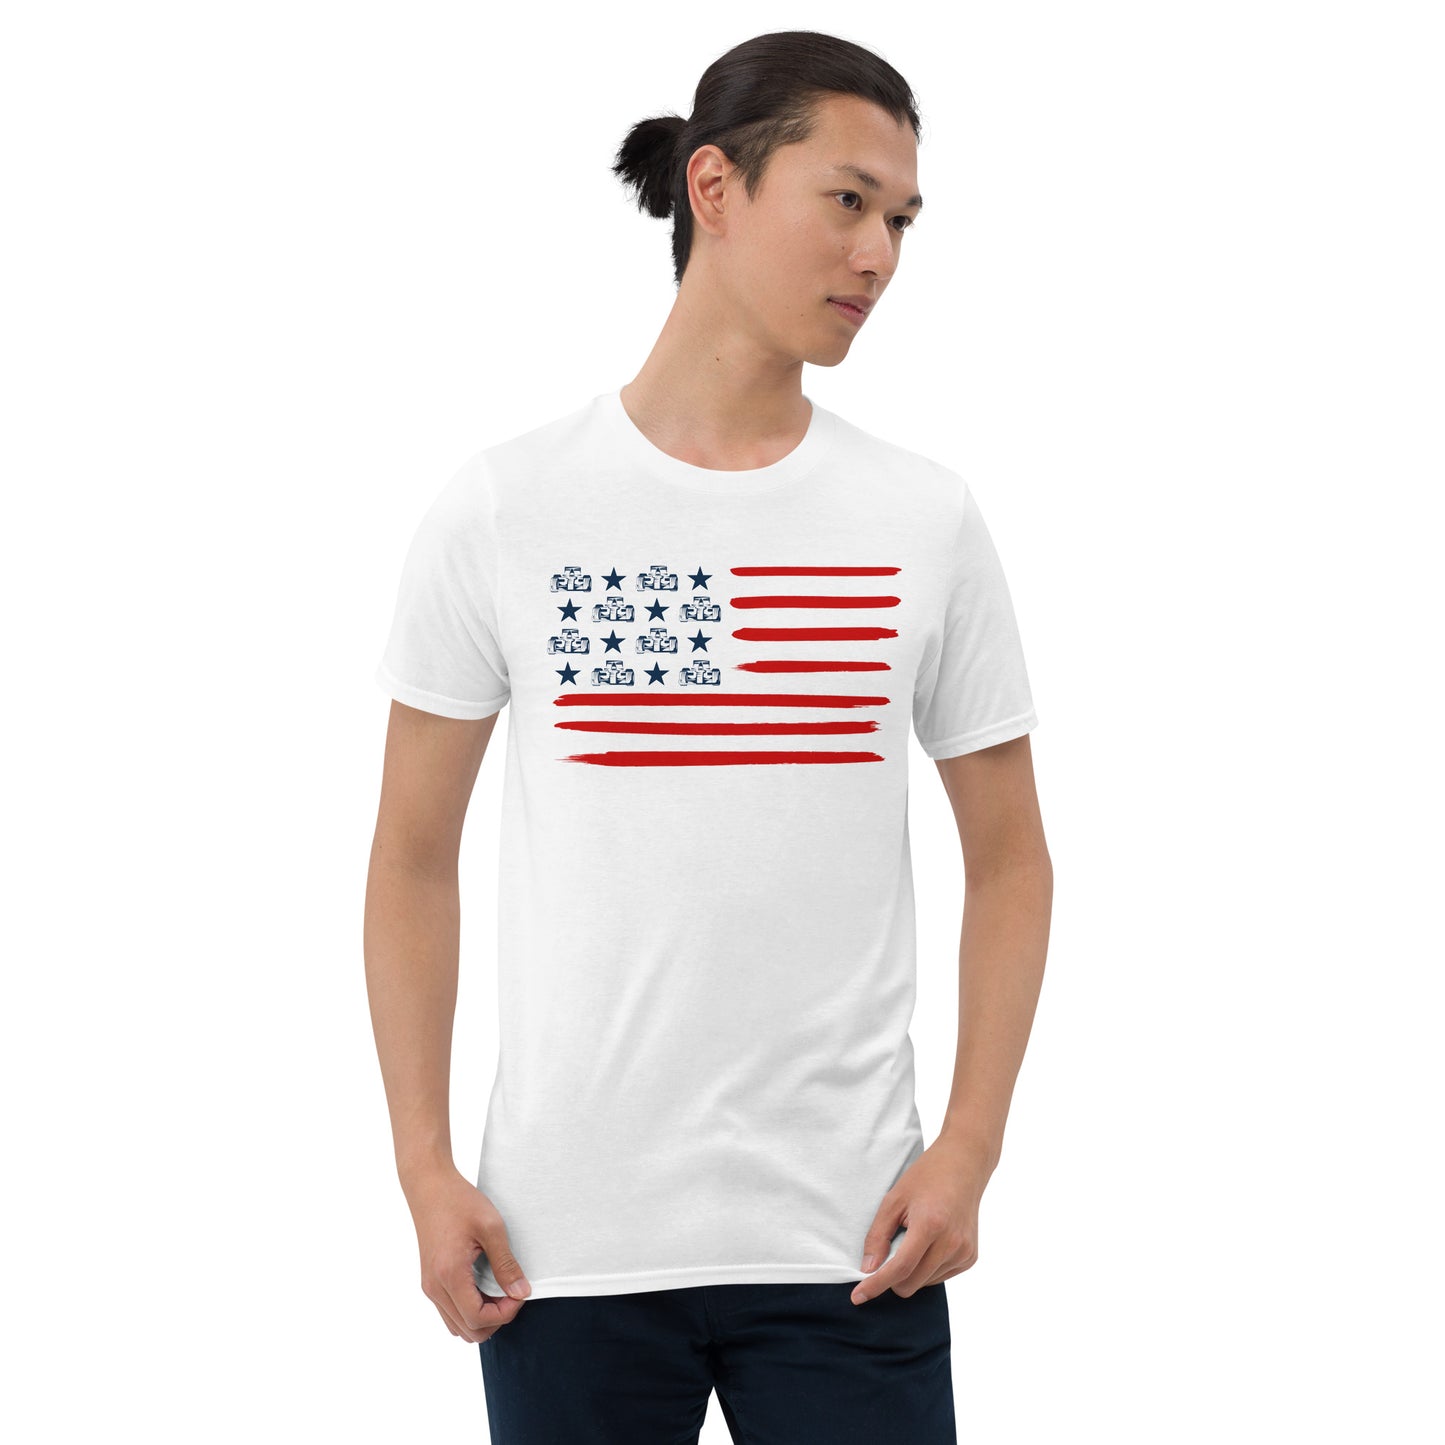 united states flag t-shirt white dressed on a men